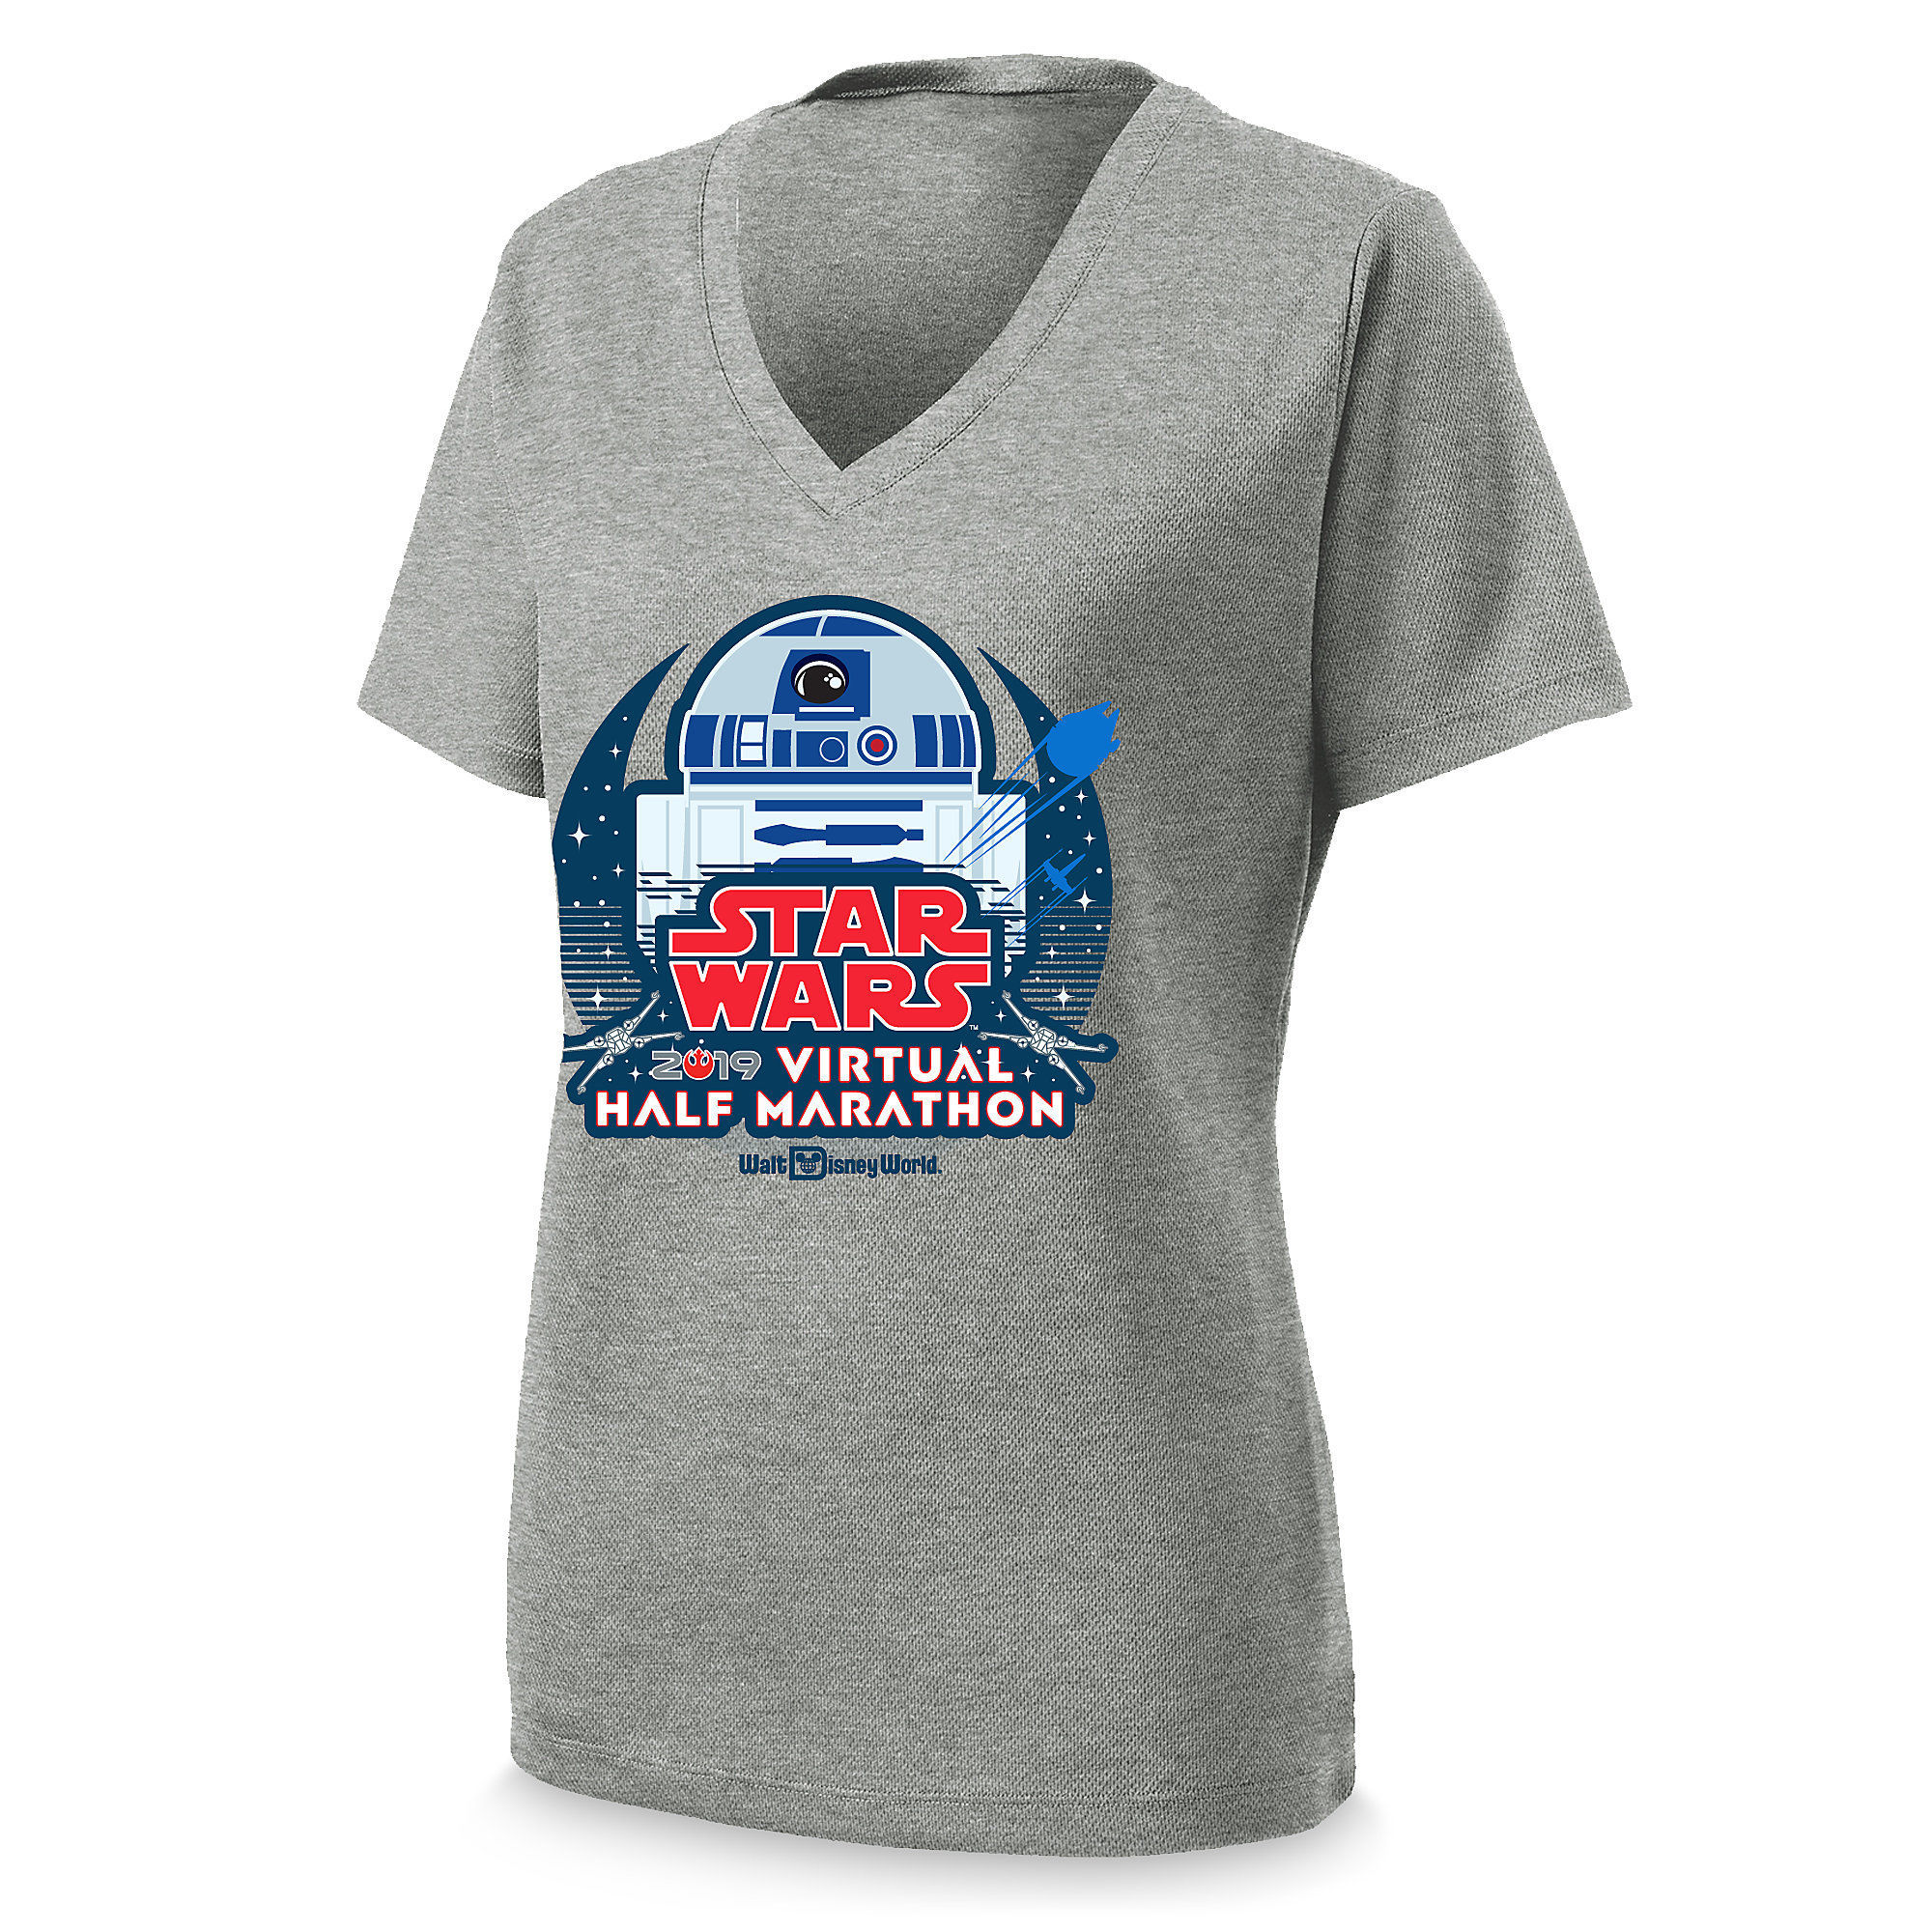 Women's Run Disney Star Wars Virtual Half Marathon 2019 Event T-Shirt at Shop Disney